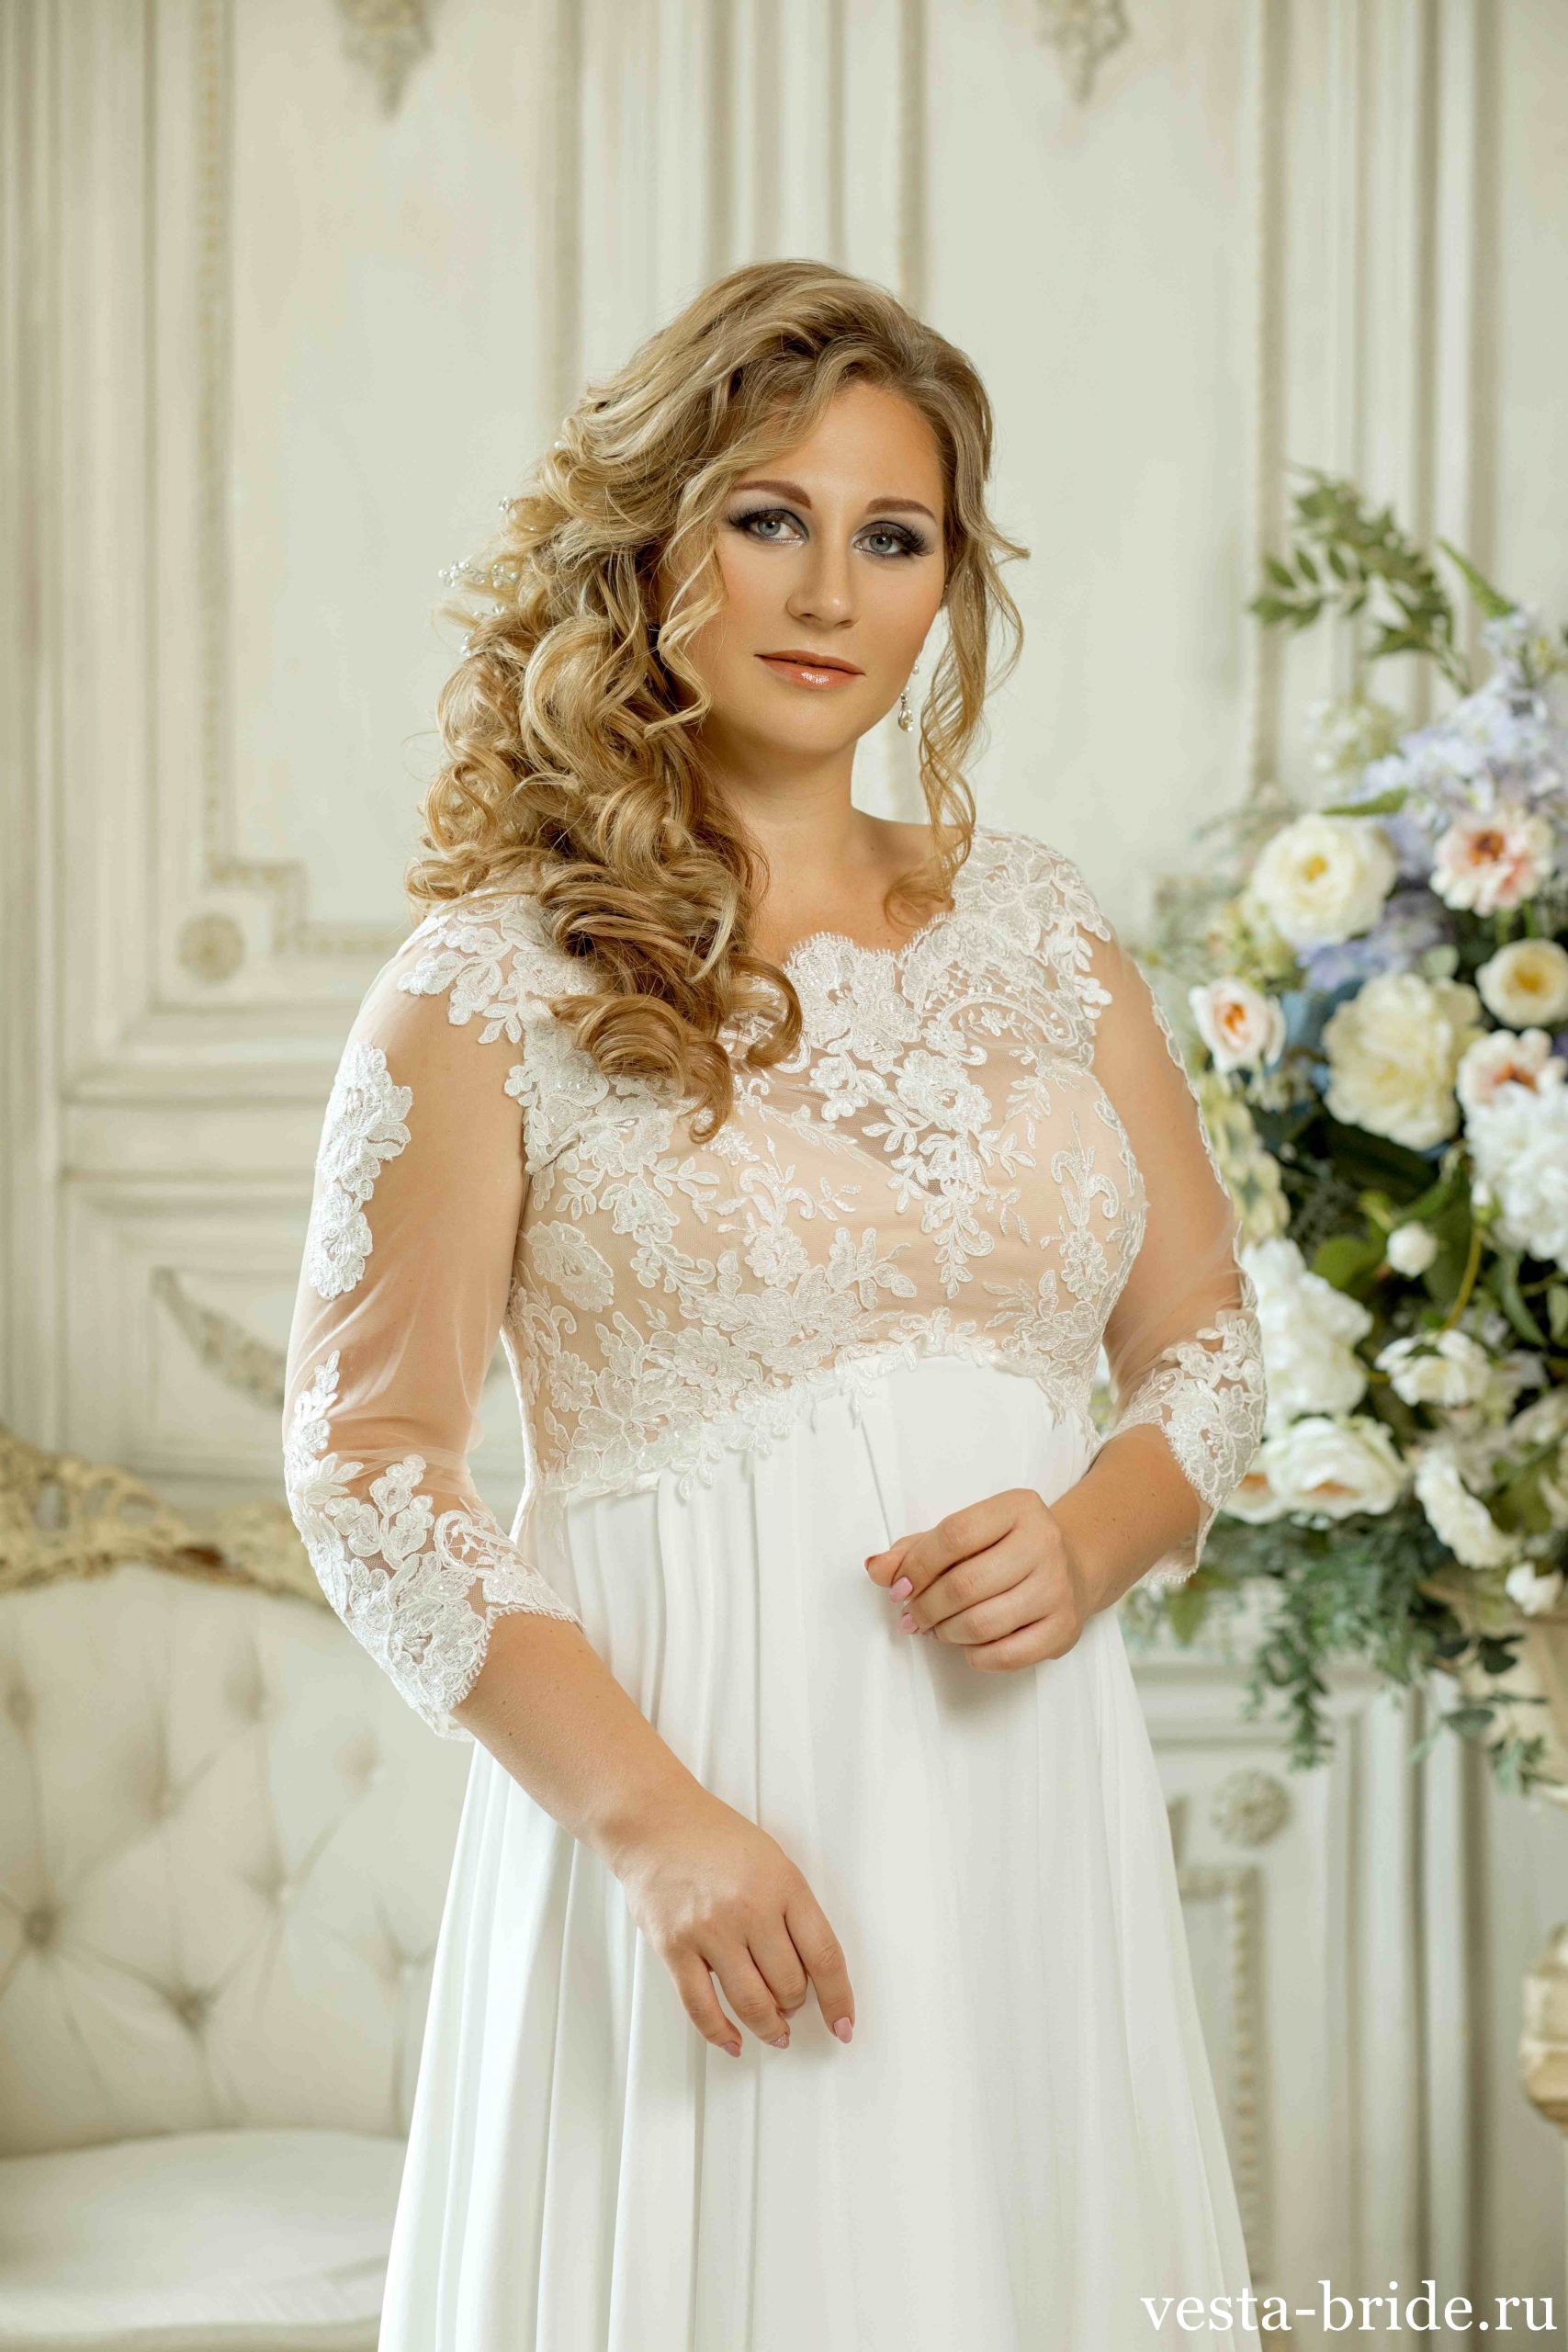 sx3hql16sfuy5wzoh1kv7wy scaled Закрытое свадебное платье с рукавом Meliya